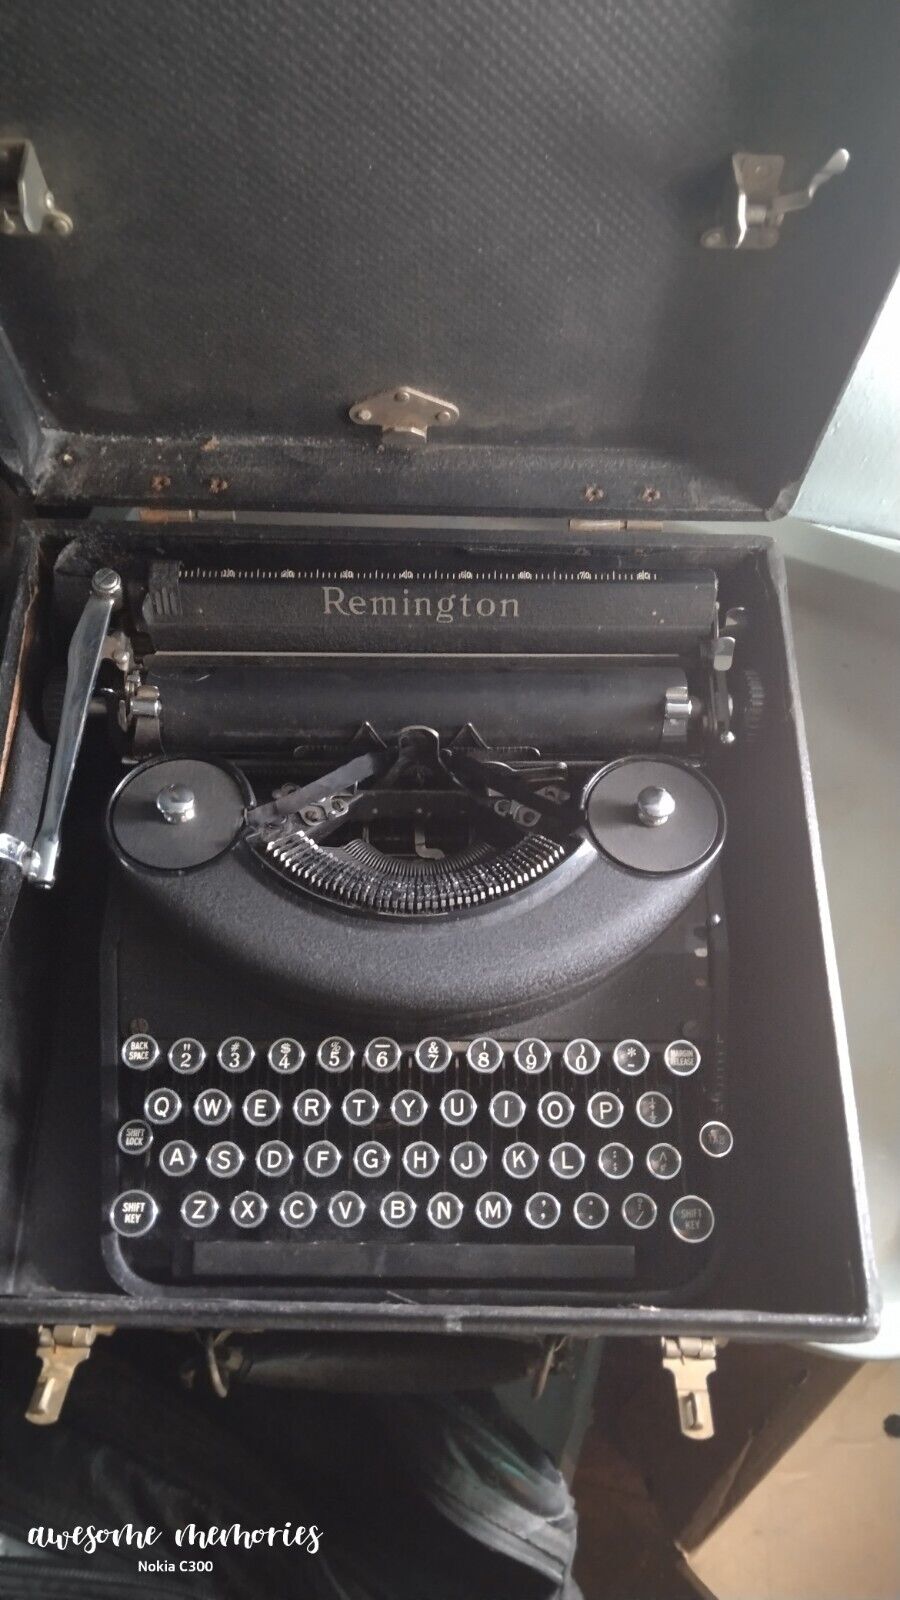 Vintage Remington Portable Noiseless Typewriter with Hard Case